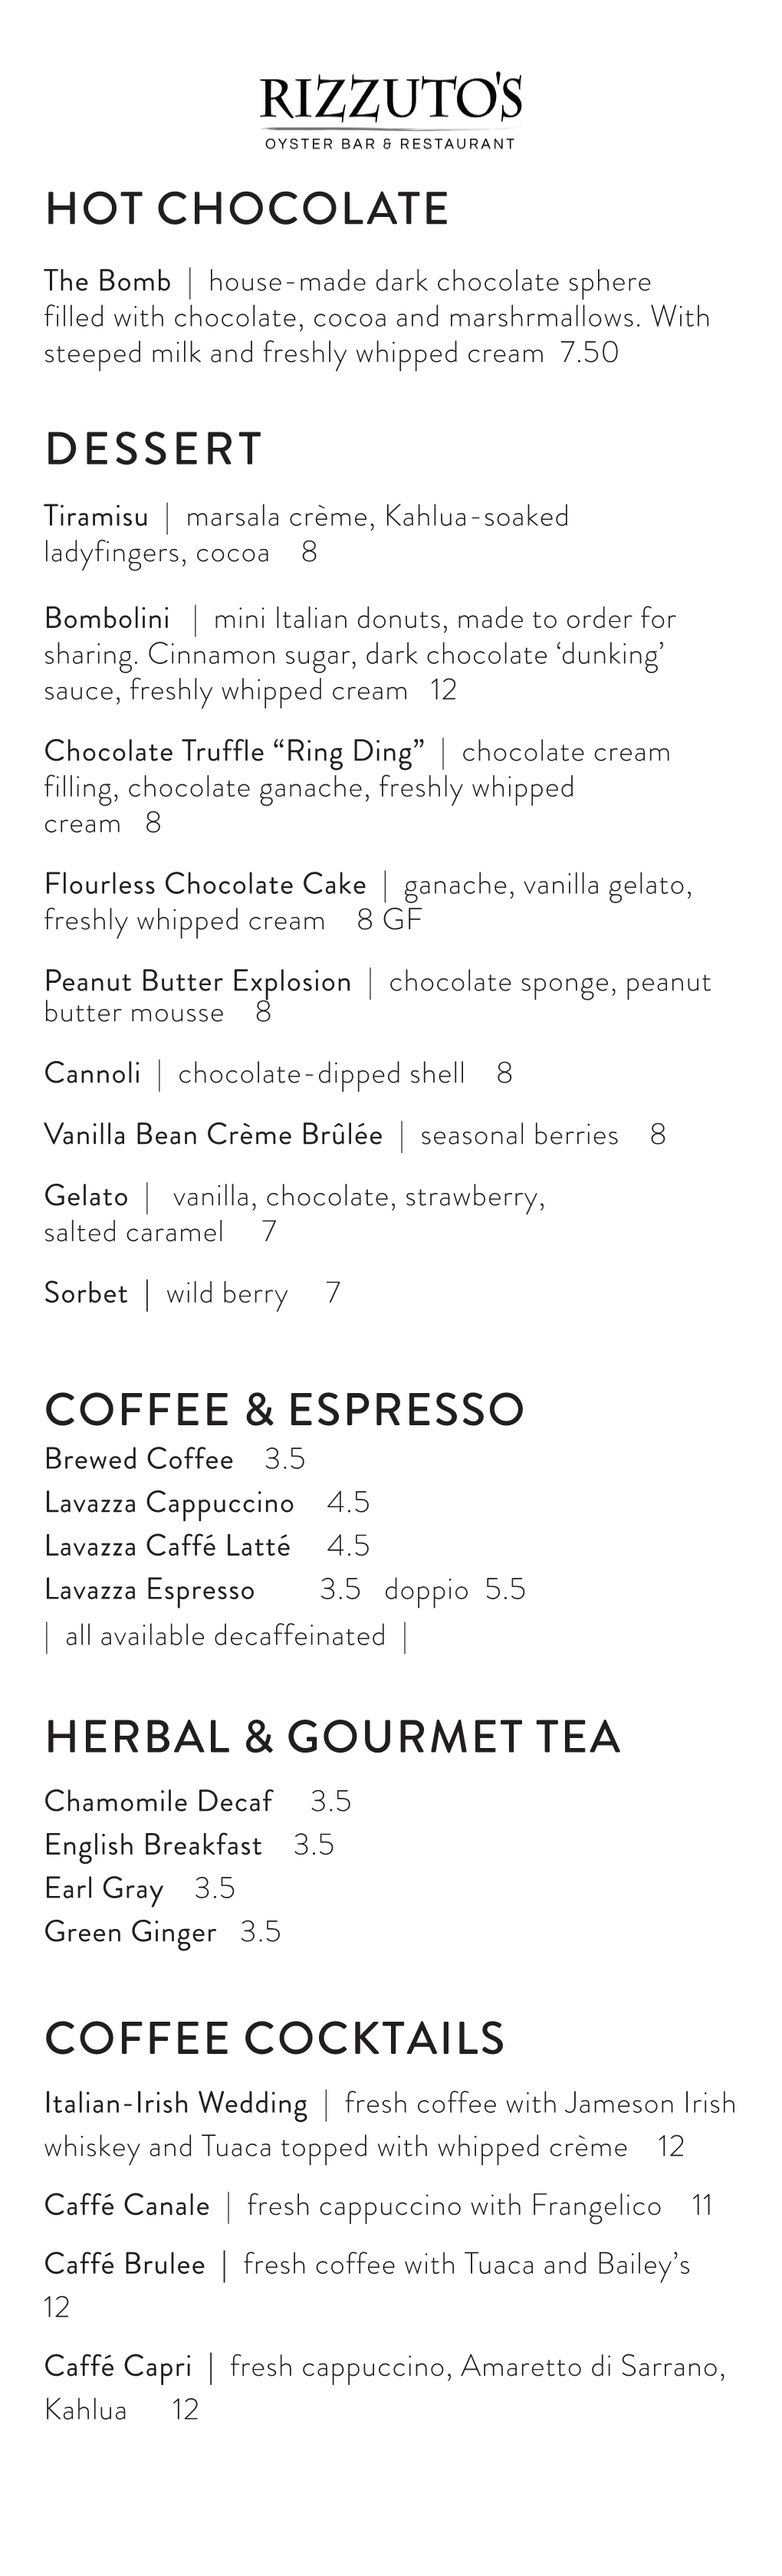 Hot Chocolate Dessert Coffee & Espresso Herbal